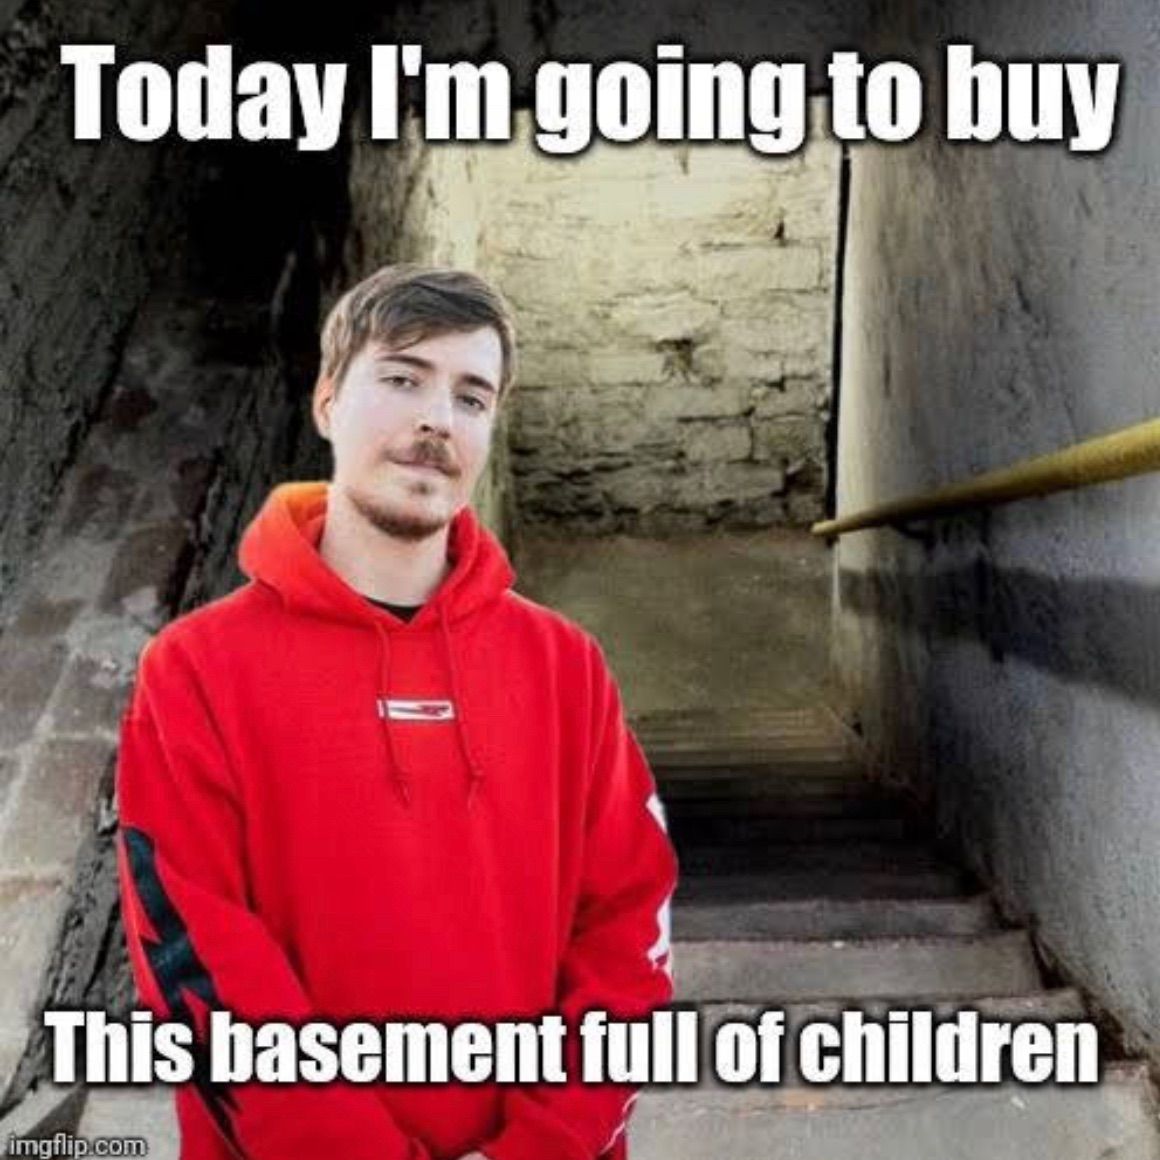 Today I'm going to buy
This basement full of children
imgflip.com